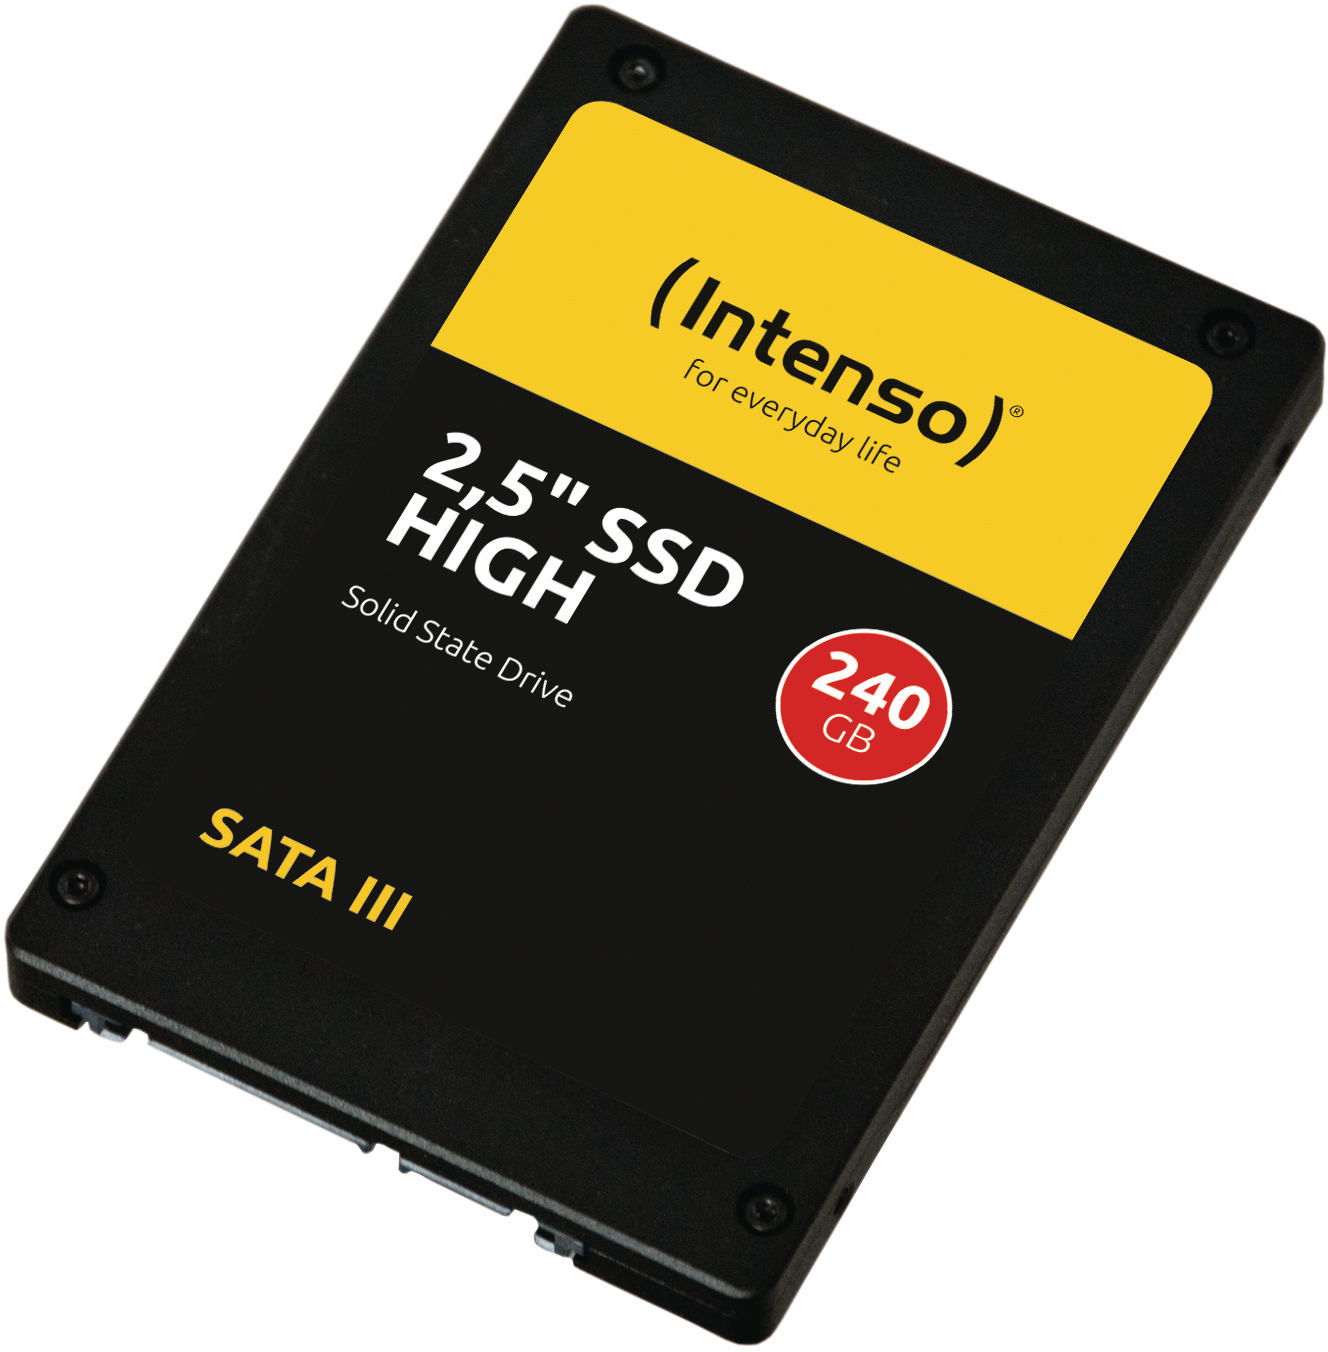 INTENSO SSD HIGH 240GB 3813440 Sata III Sata III